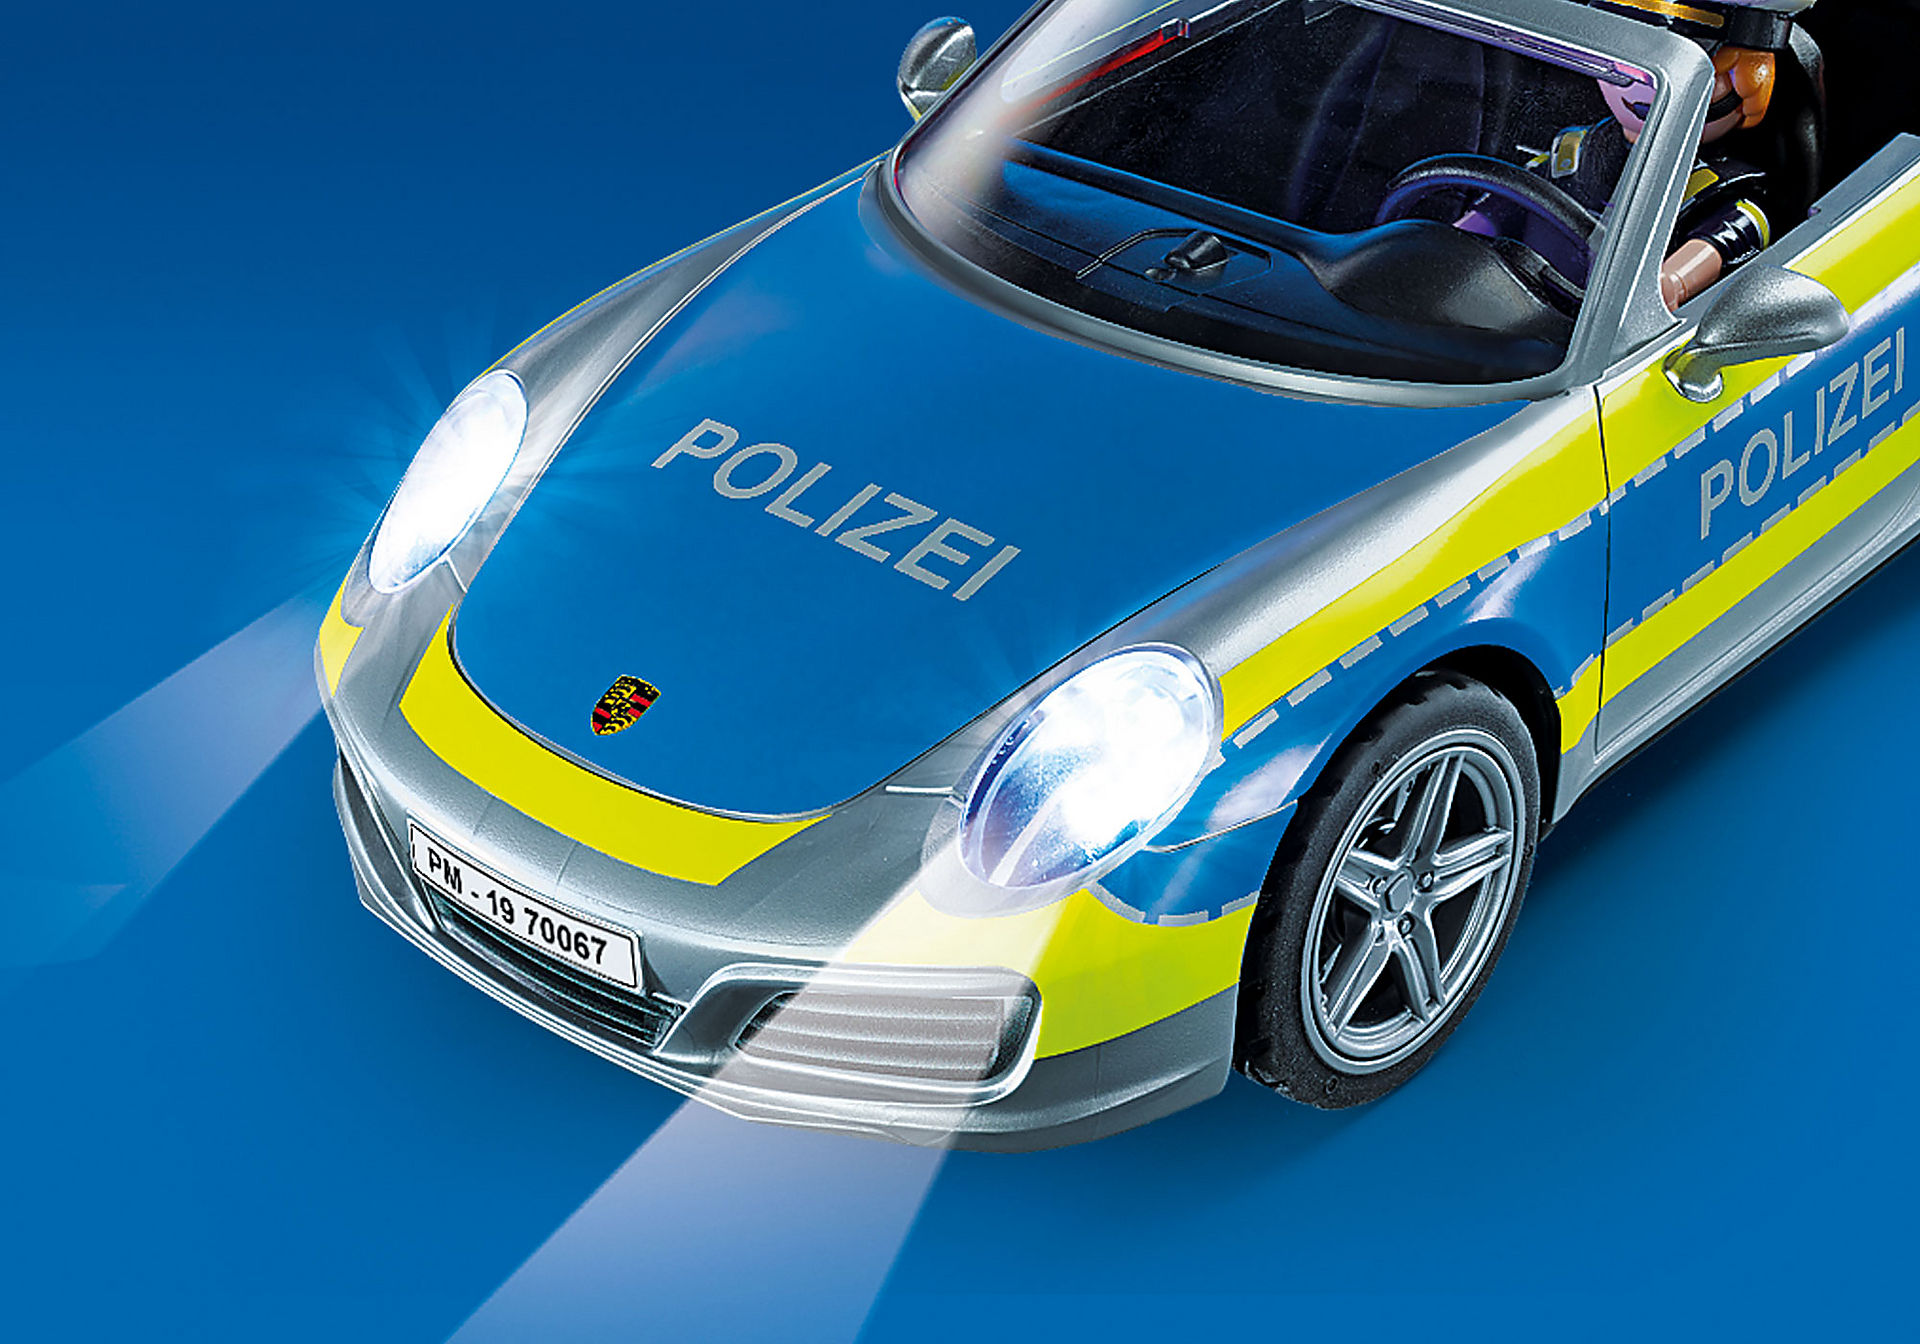 70067 Porsche 911 Carrera 4S Polizei zoom image6